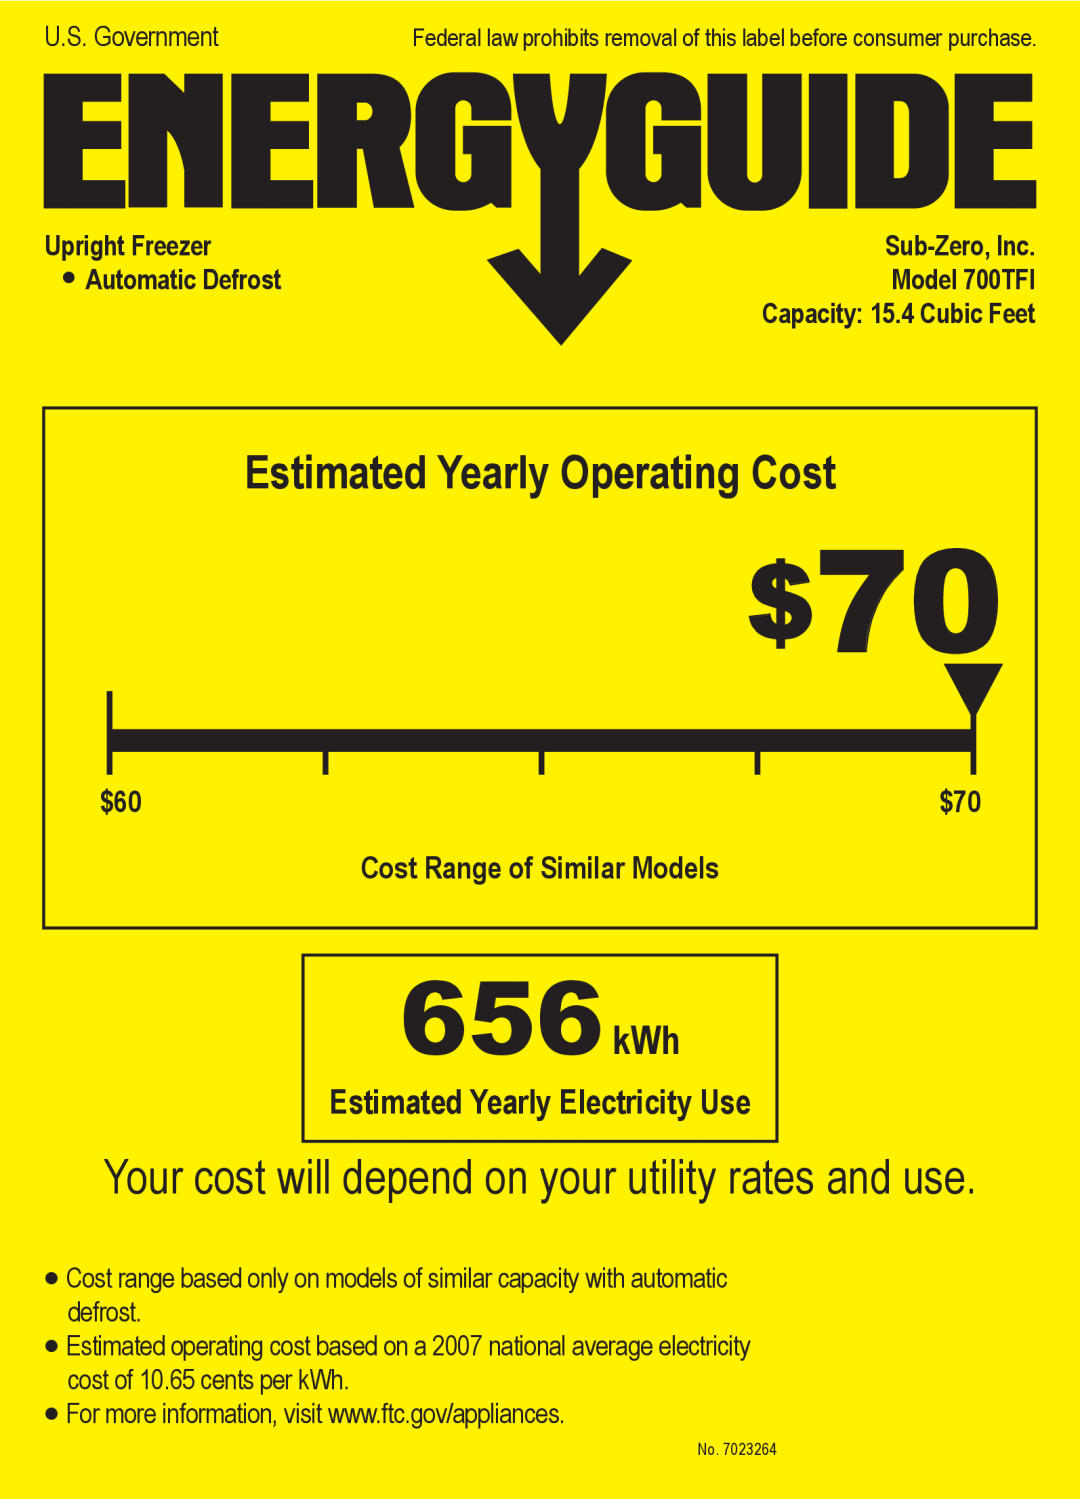 Sub-Zero 700TFI manual Estimated Yearly Electricity Use, 656kWh, Estimated Yearly Operating Cost, Upright Freezer 